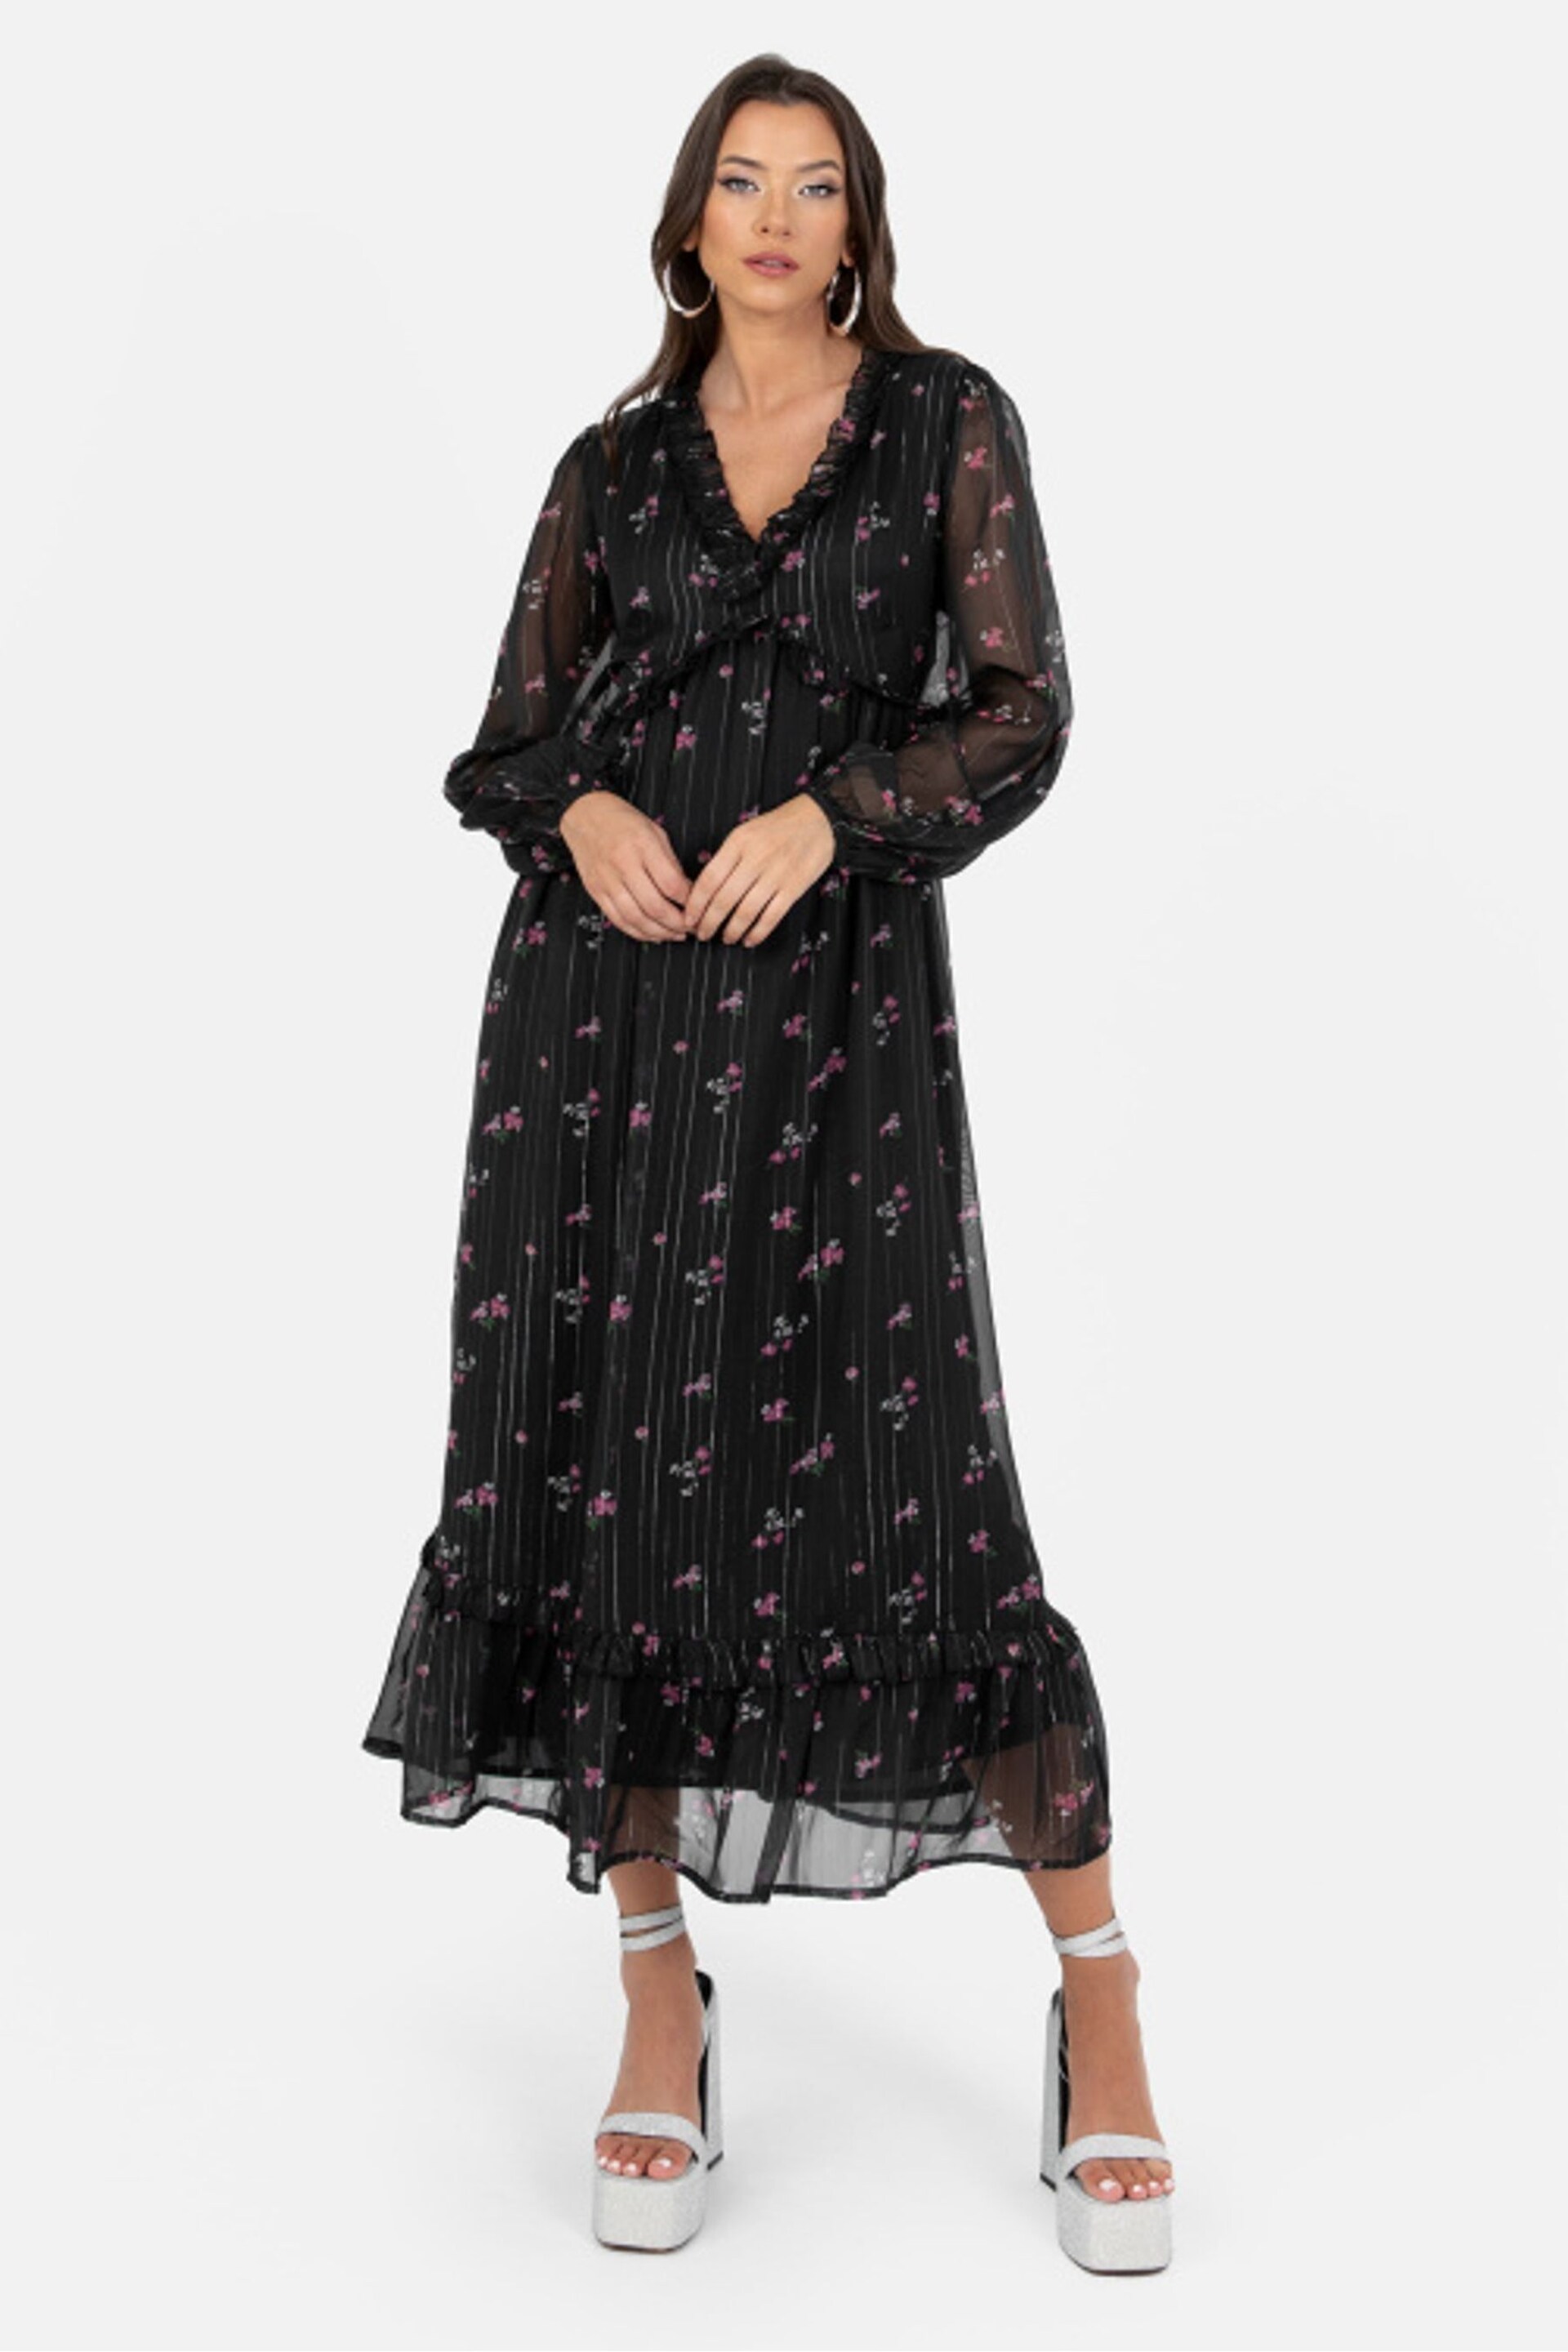 Lovedrobe Print Floral Frill Detail Black Midaxi Dress - Image 1 of 3